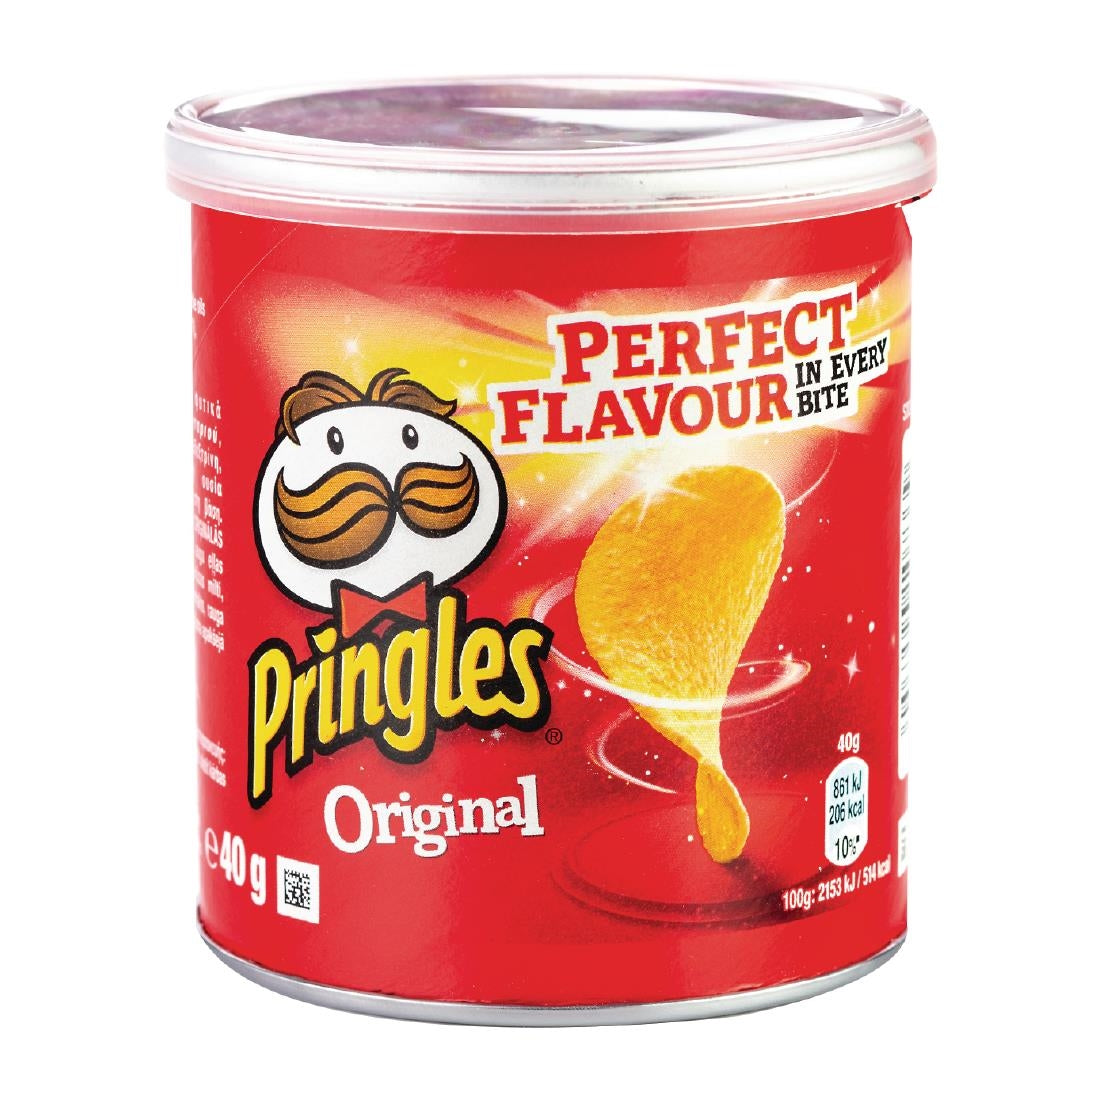 Pringles Original - 40g (Case 12)